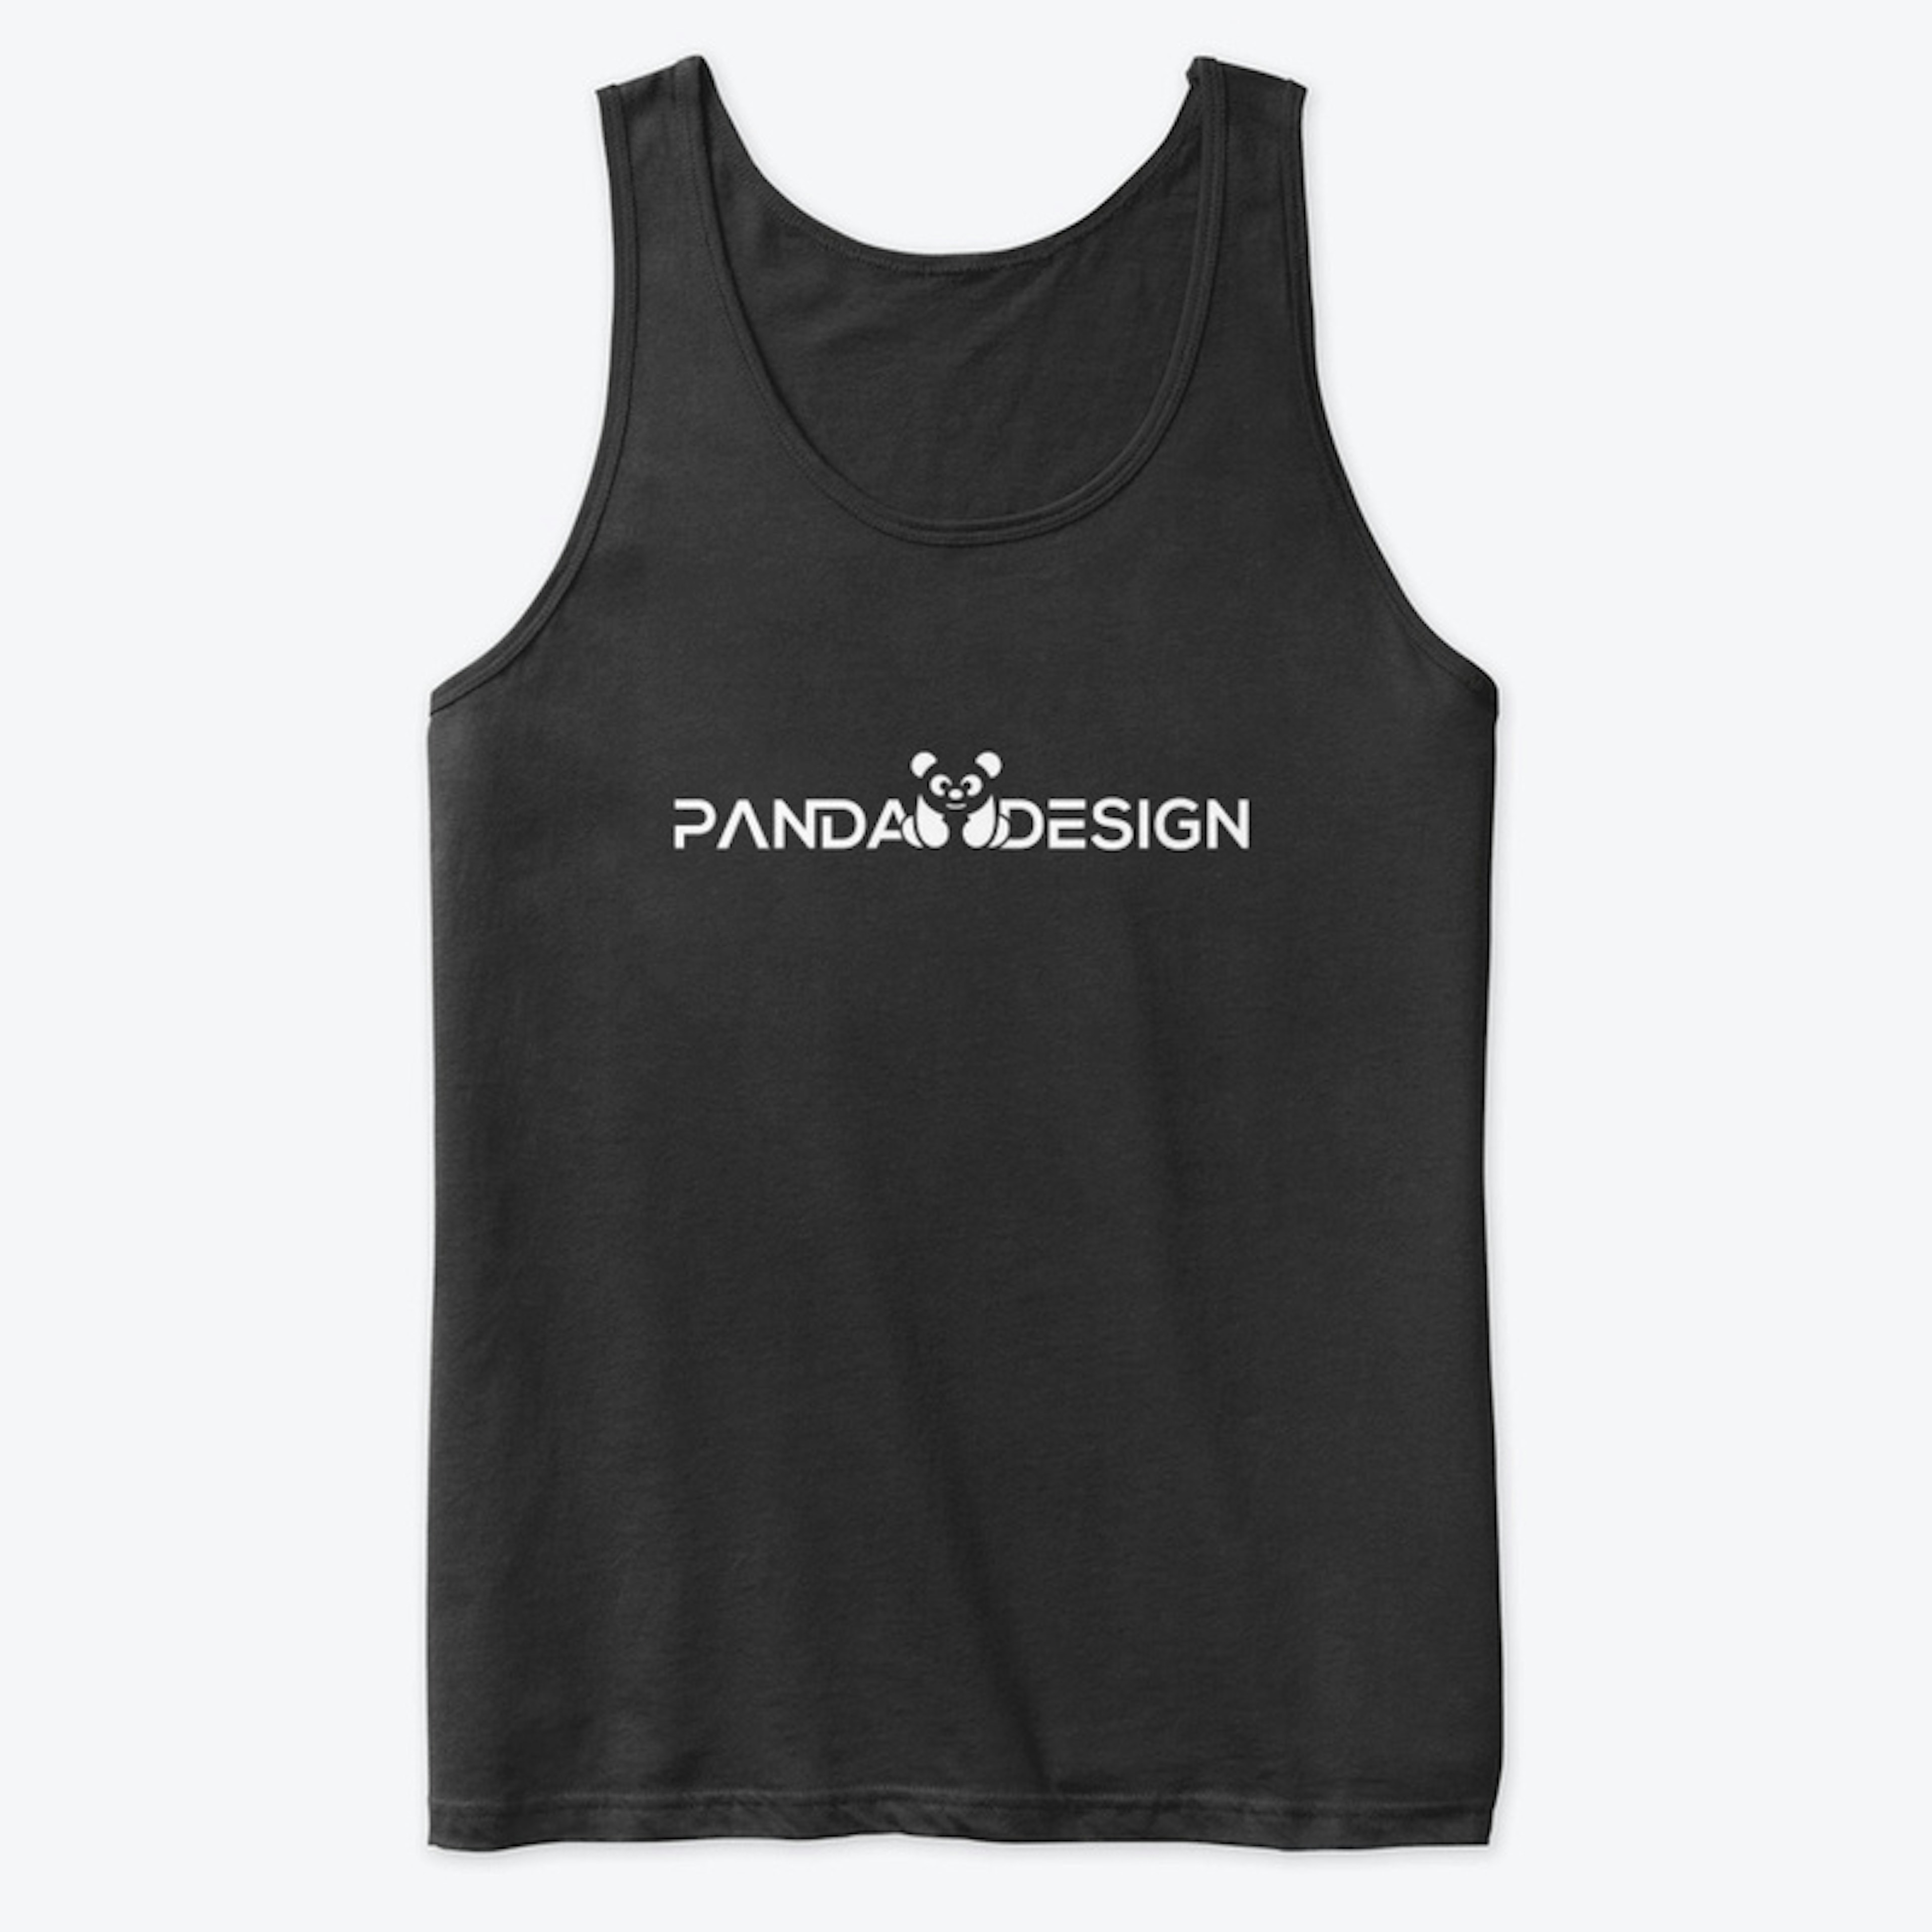 PandaDesign Clothing